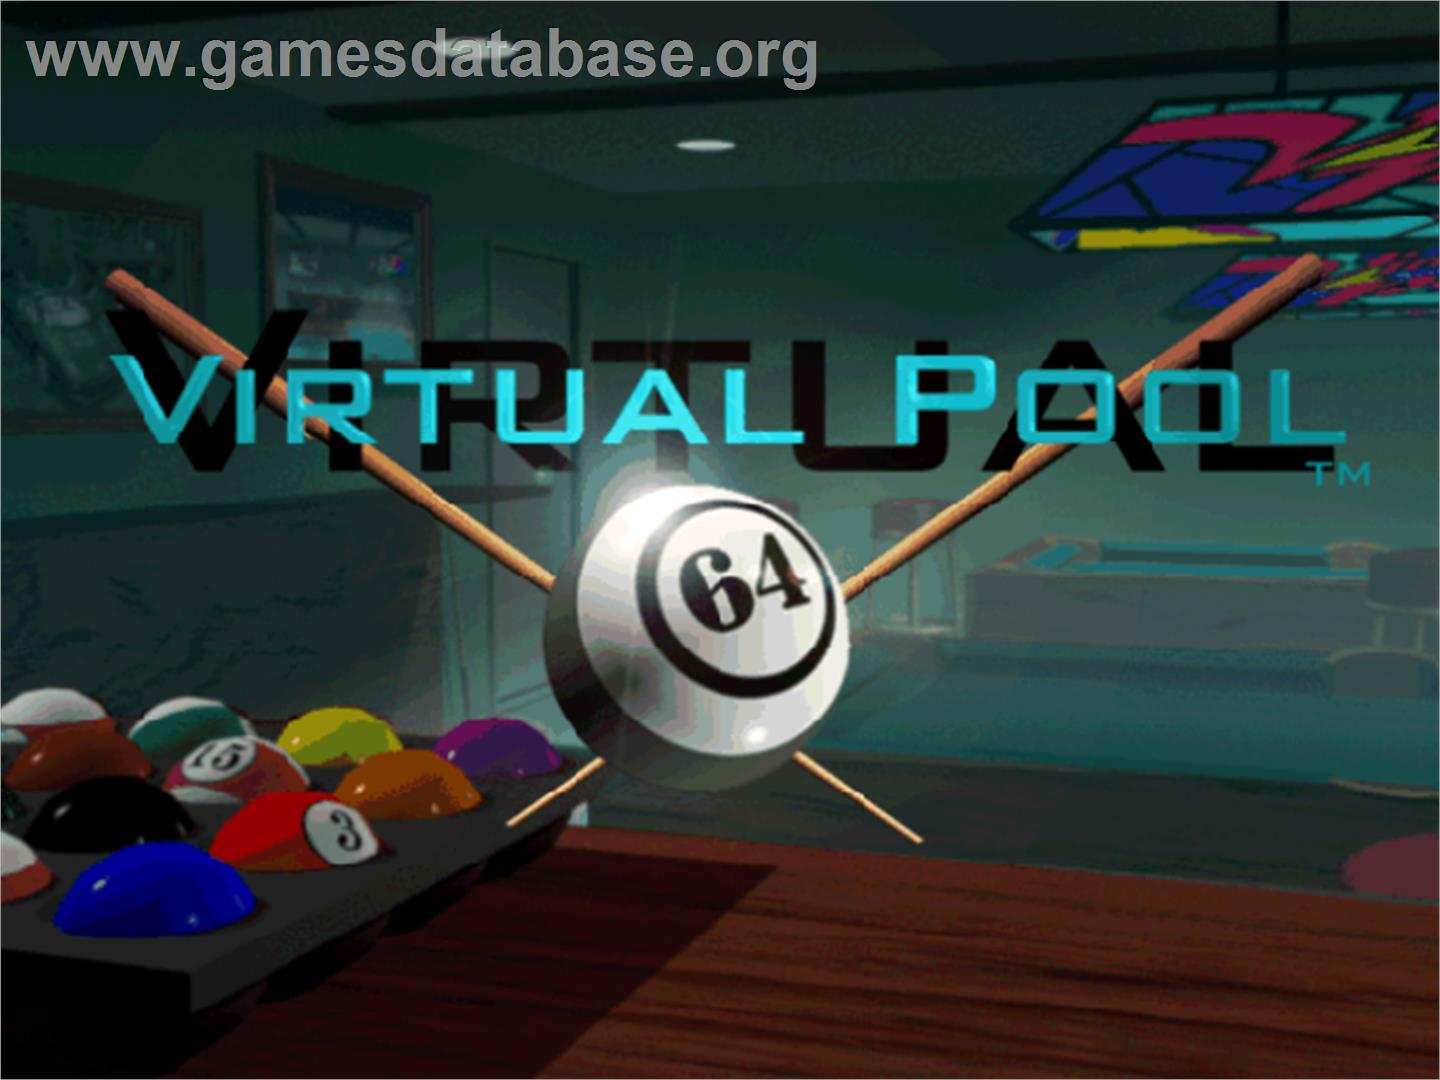 Virtual Pool 64 - Nintendo N64 - Artwork - Title Screen